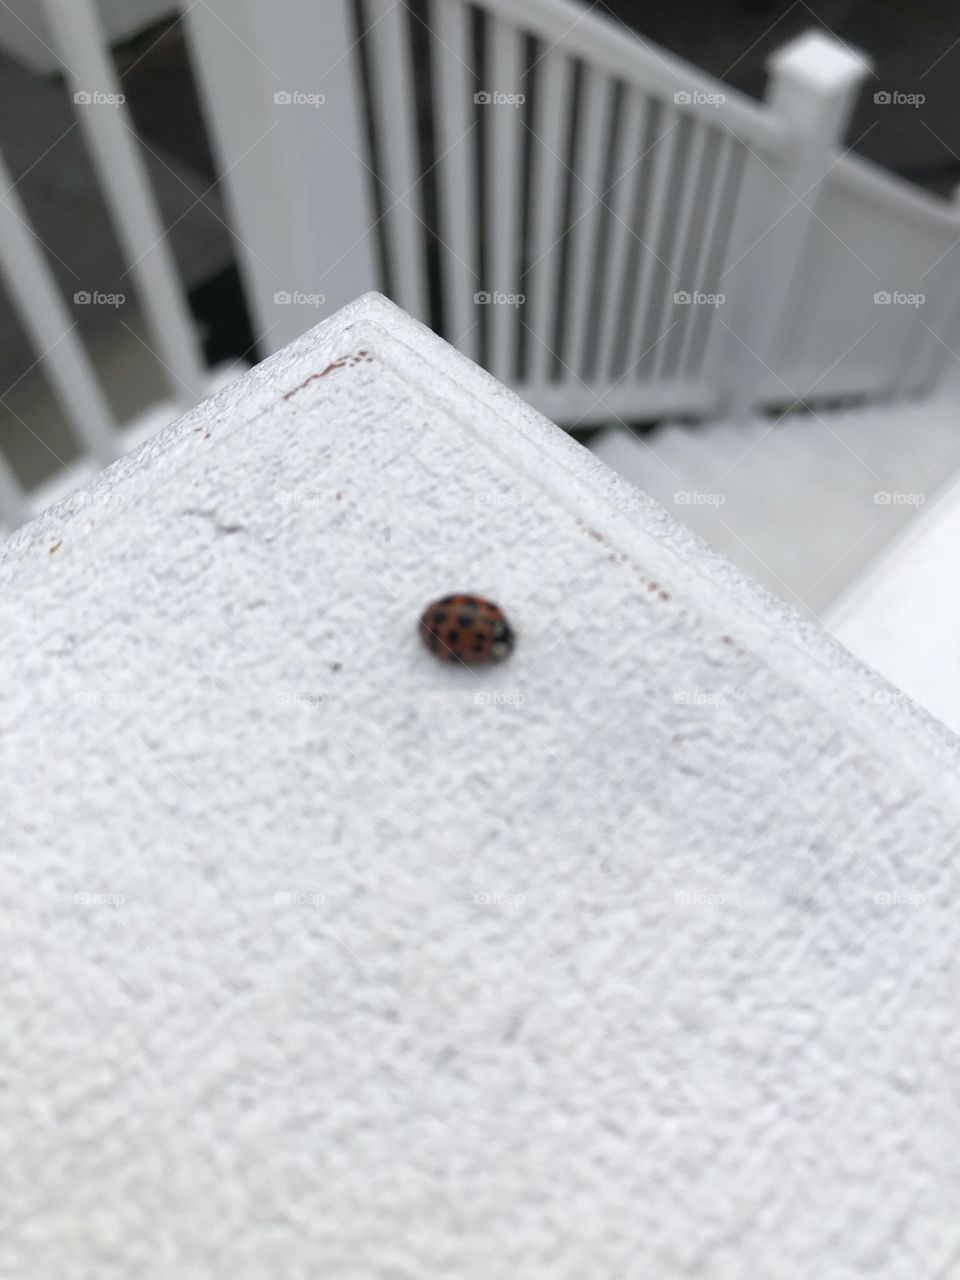 A beautiful Ladybug. Went outside to find this beautiful ladybug on my balcony. 